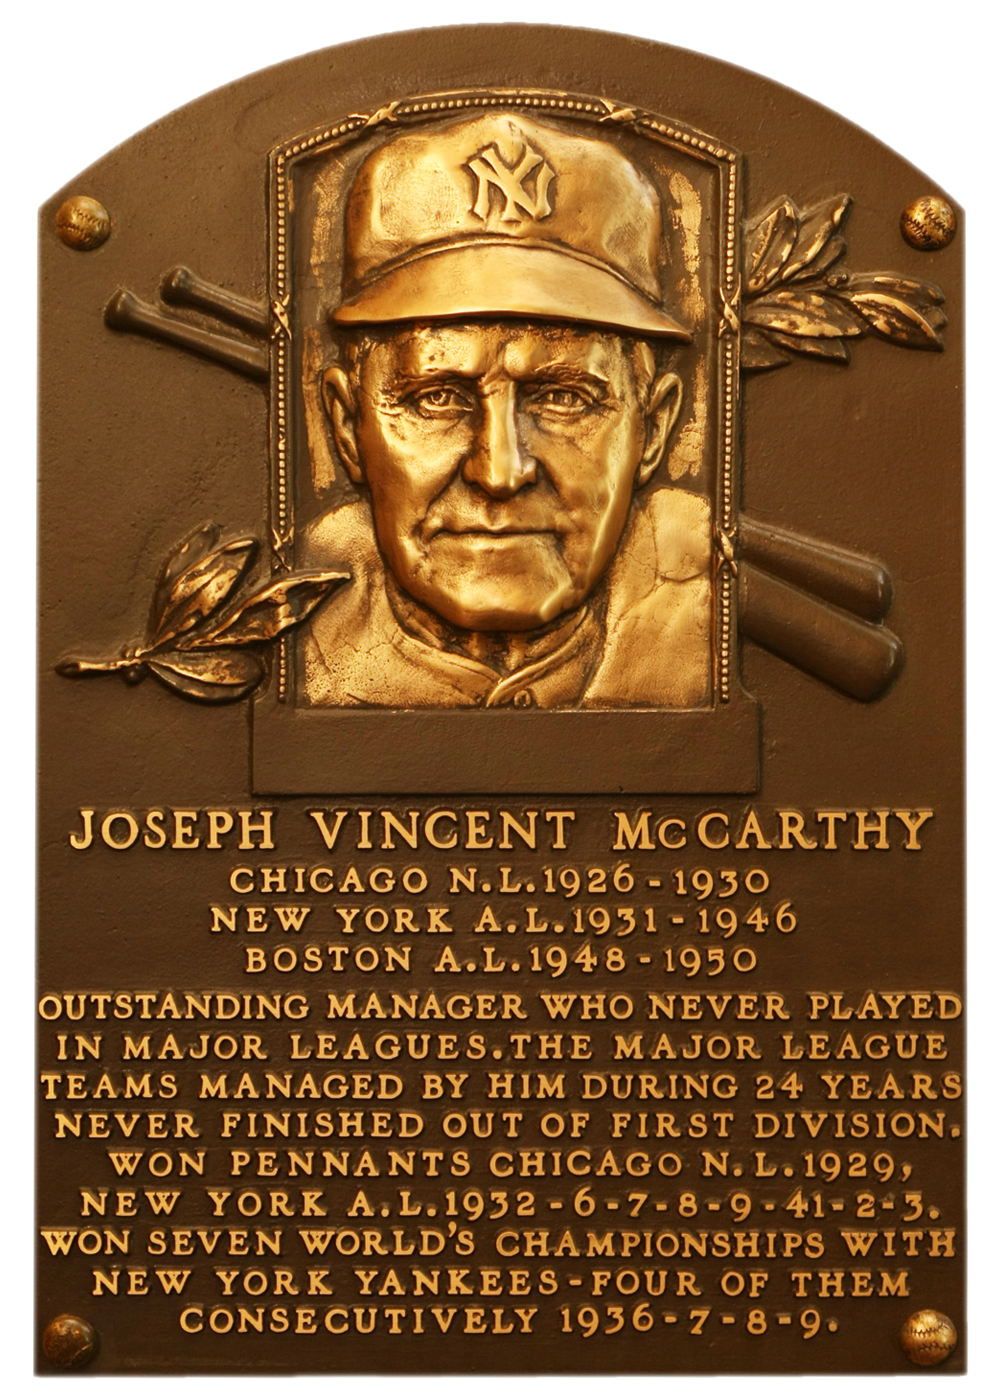 Joe McCarthy Hall of Fame plaque